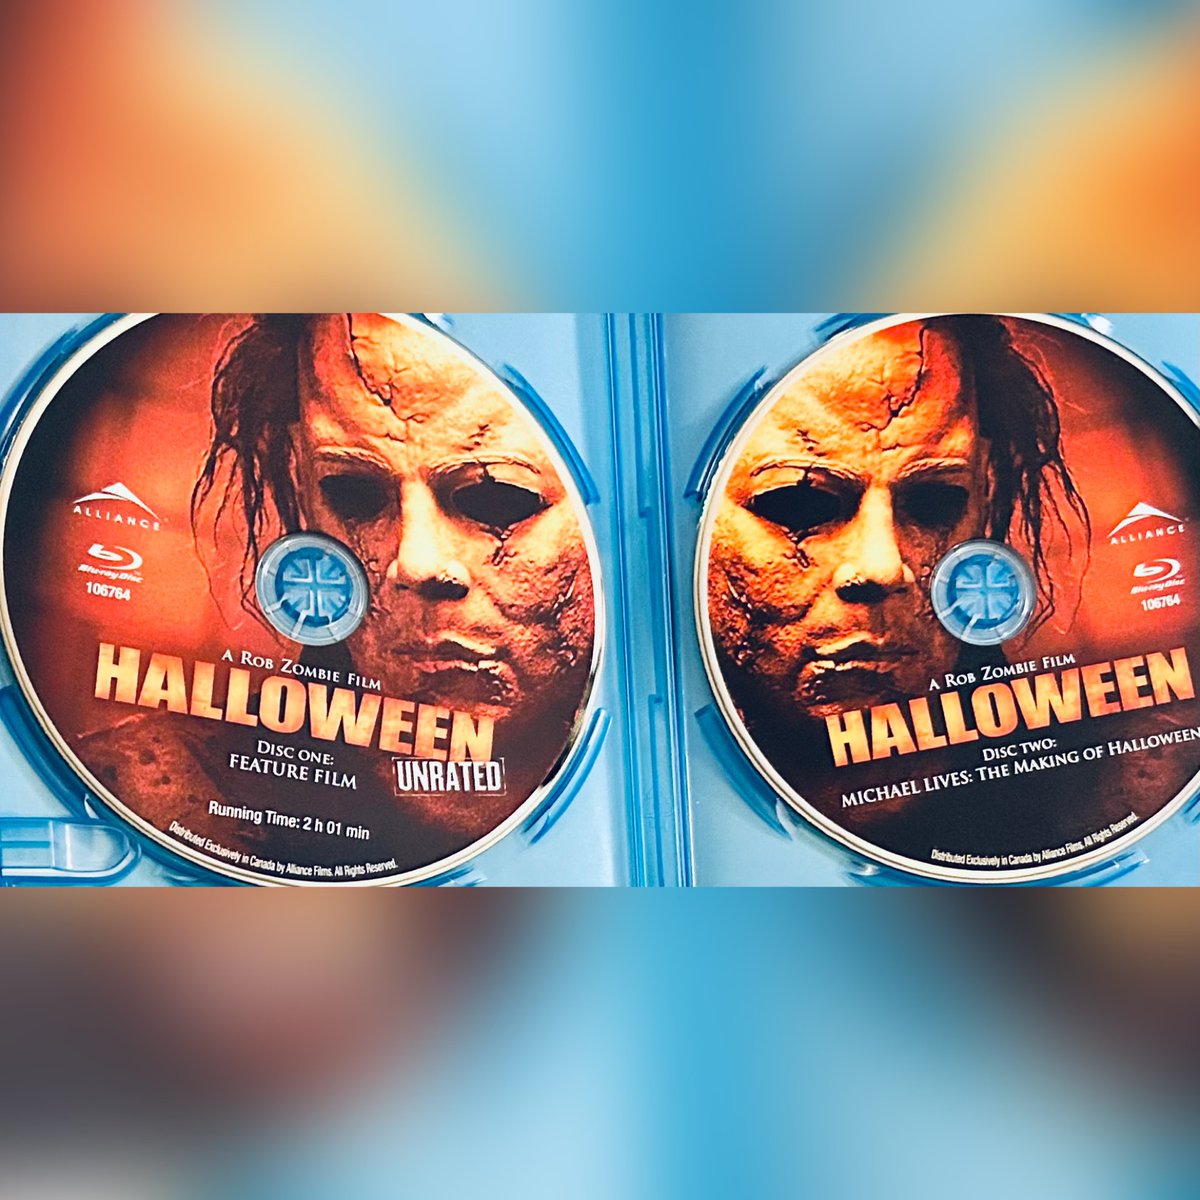 #Restock! Halloween (Blu-ray, 2008) Rob Zombie 2-Disc Set #Unrated Collector’s Edition 

rareflicksplus.com/all-products/o…

#Halloween #Halloween2008 #RobZombie #RobZombiesHalloween #CollectorsEdition #htf #Horror #HorrorCommunity #HorrorMovie #Bluray #Blurays #MichaelMyers